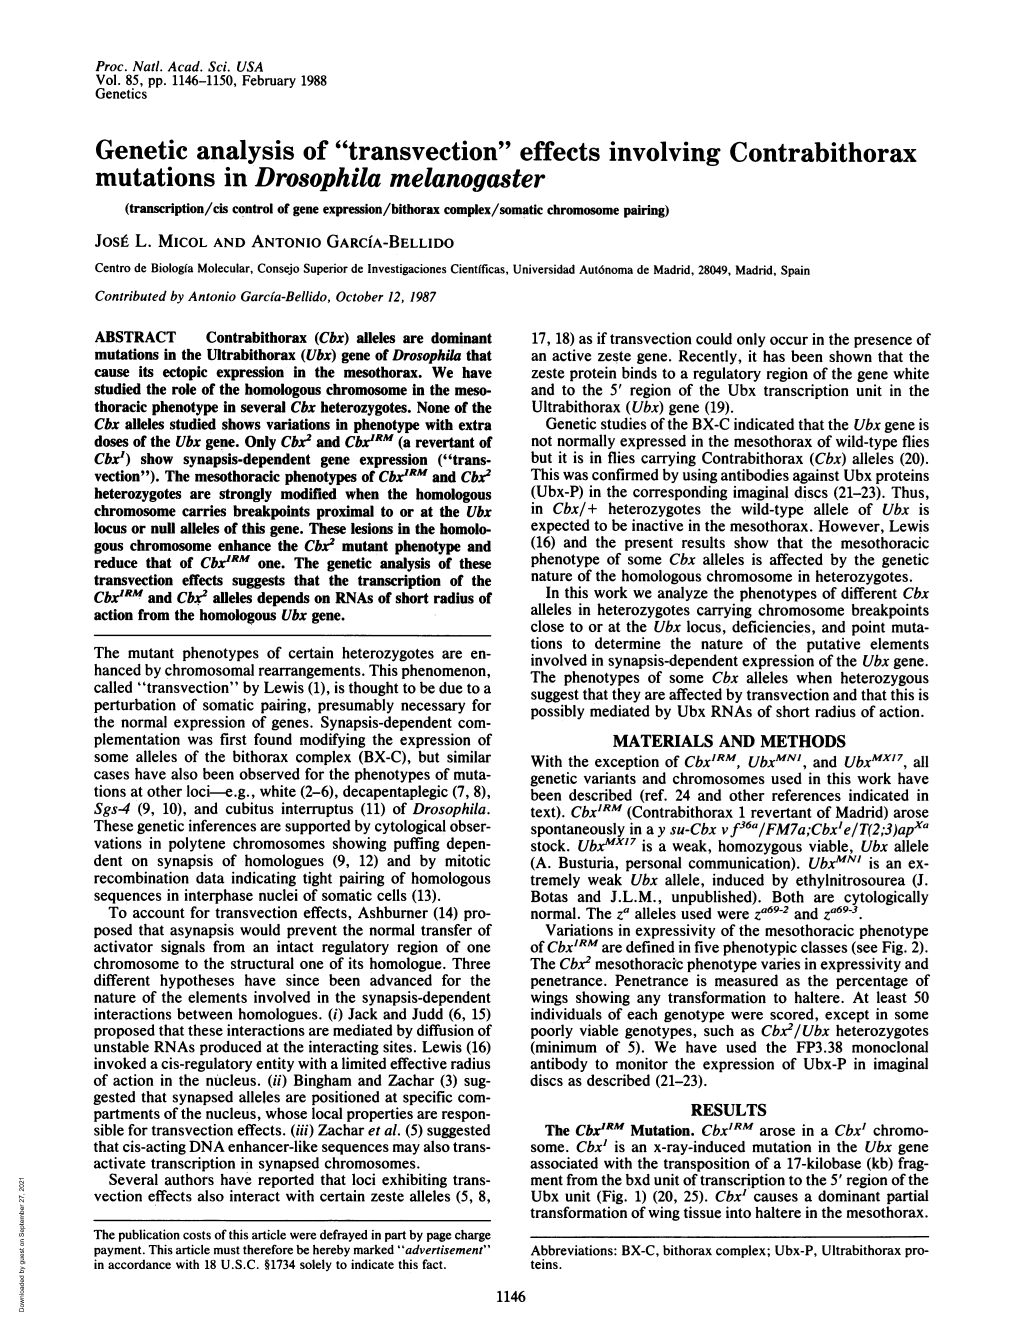 Genetic Analysis of "Transvection" Effects Involving Contrabithorax Mutations in Drosophila Melanogaster